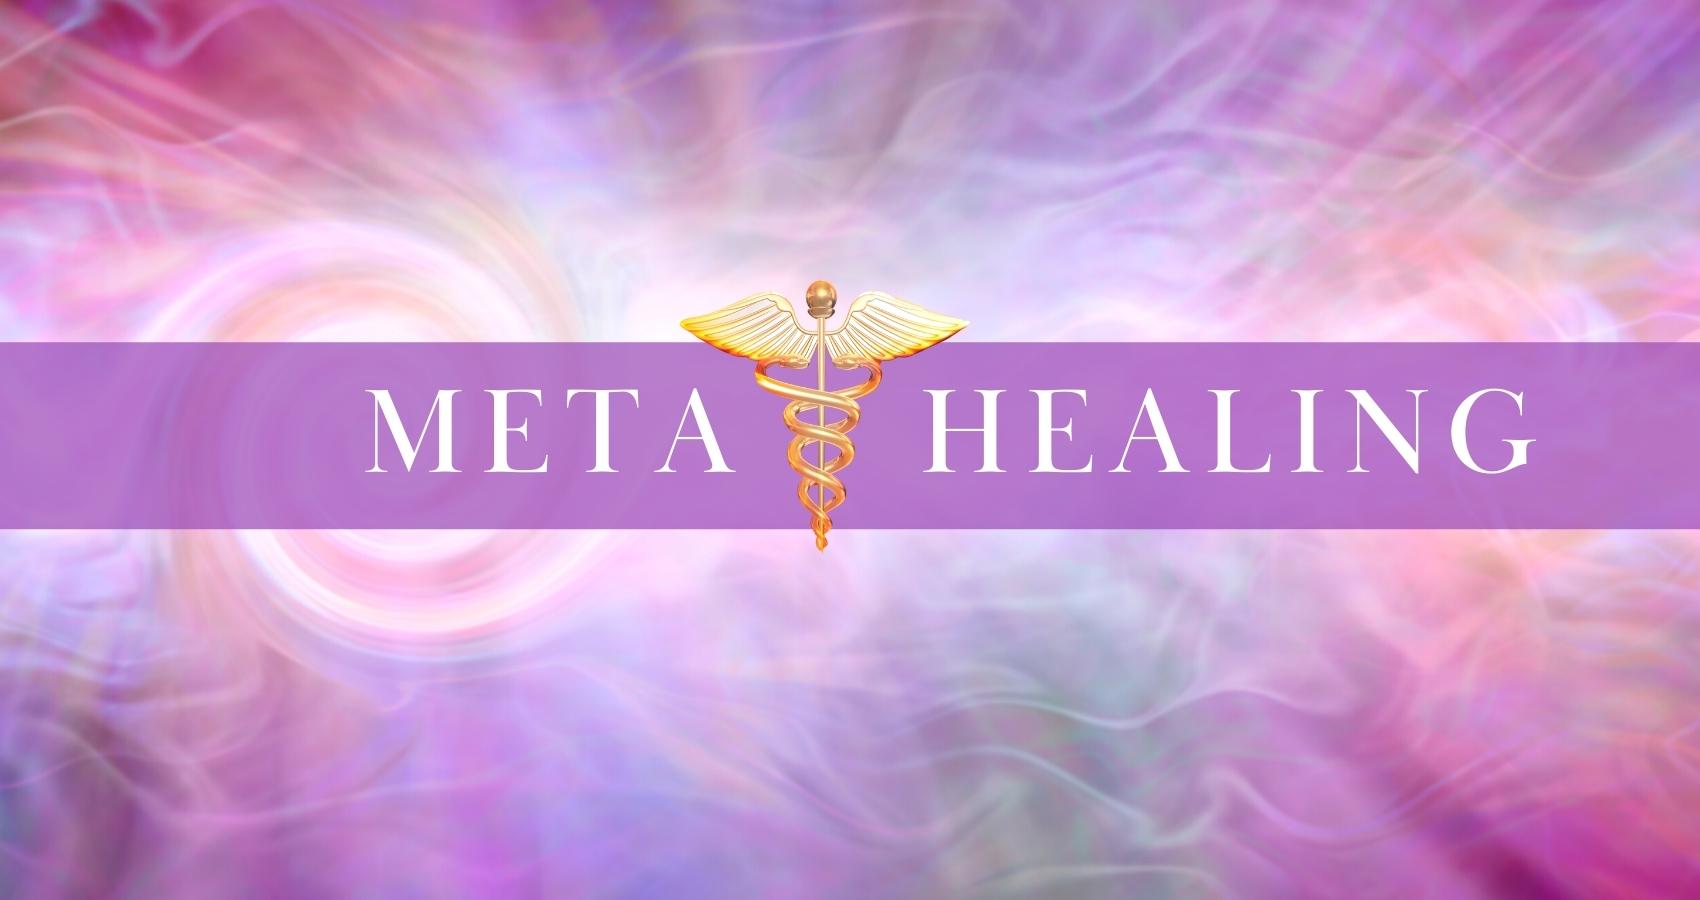 Meta Healing